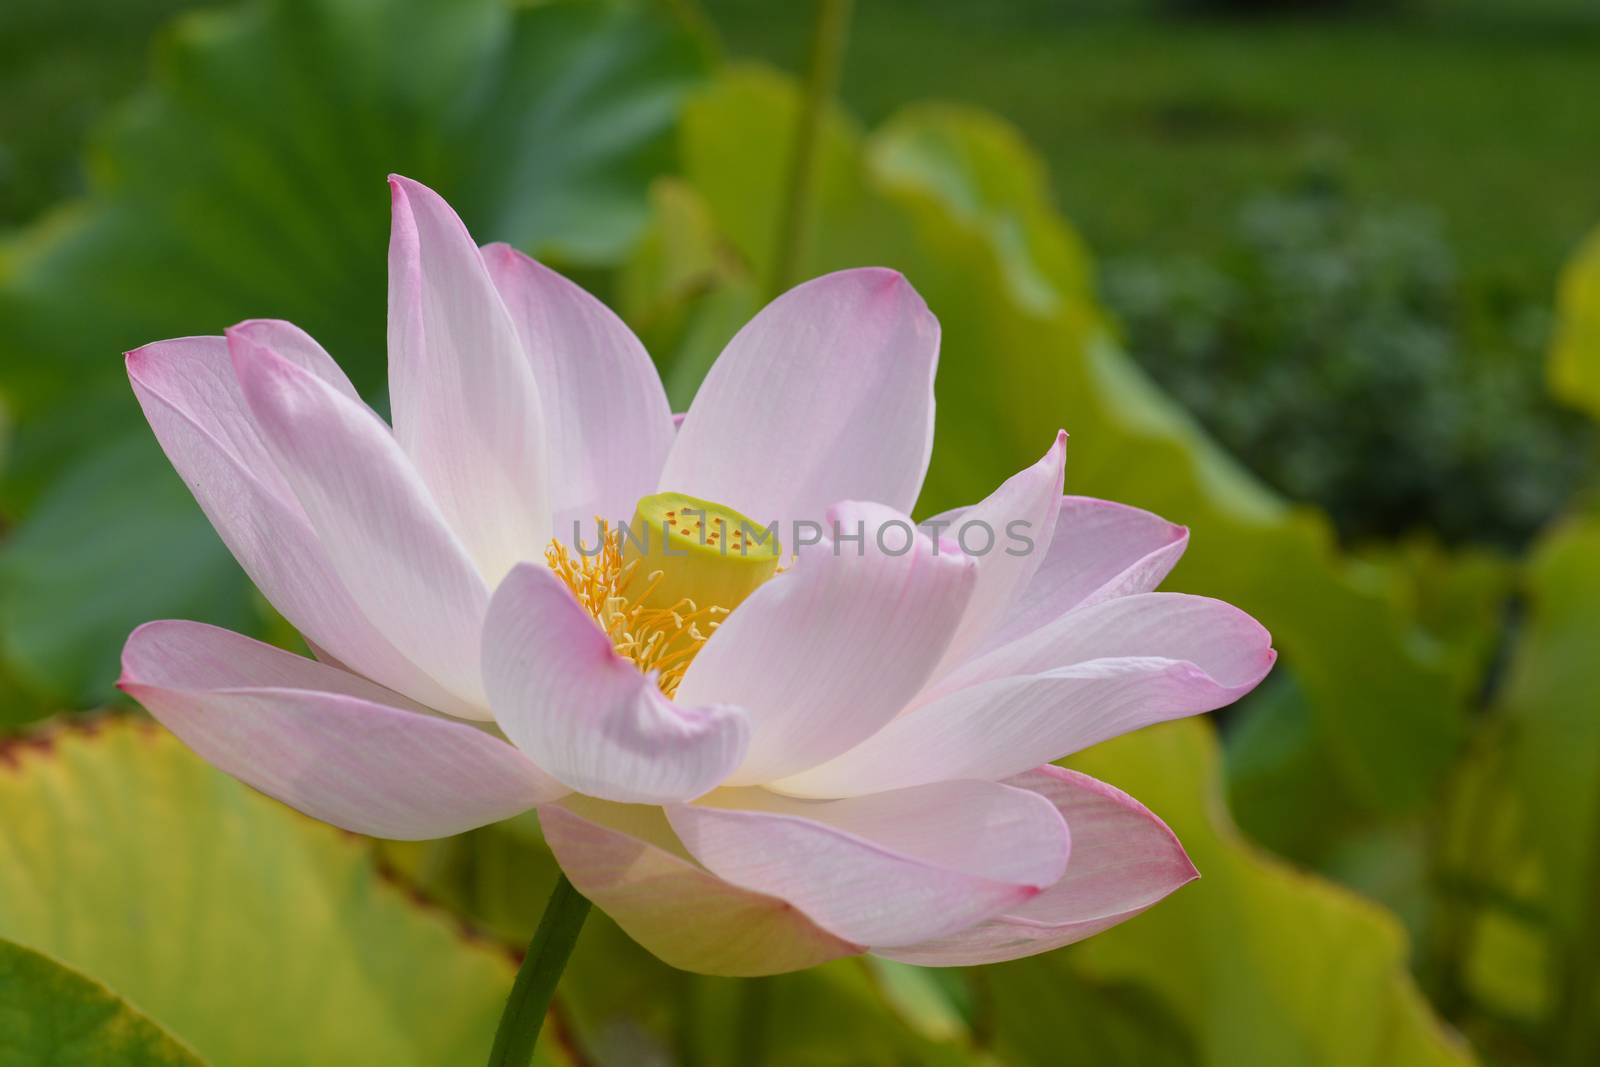 Sacred lotus flower - Latin name - Nelumbo nucifera